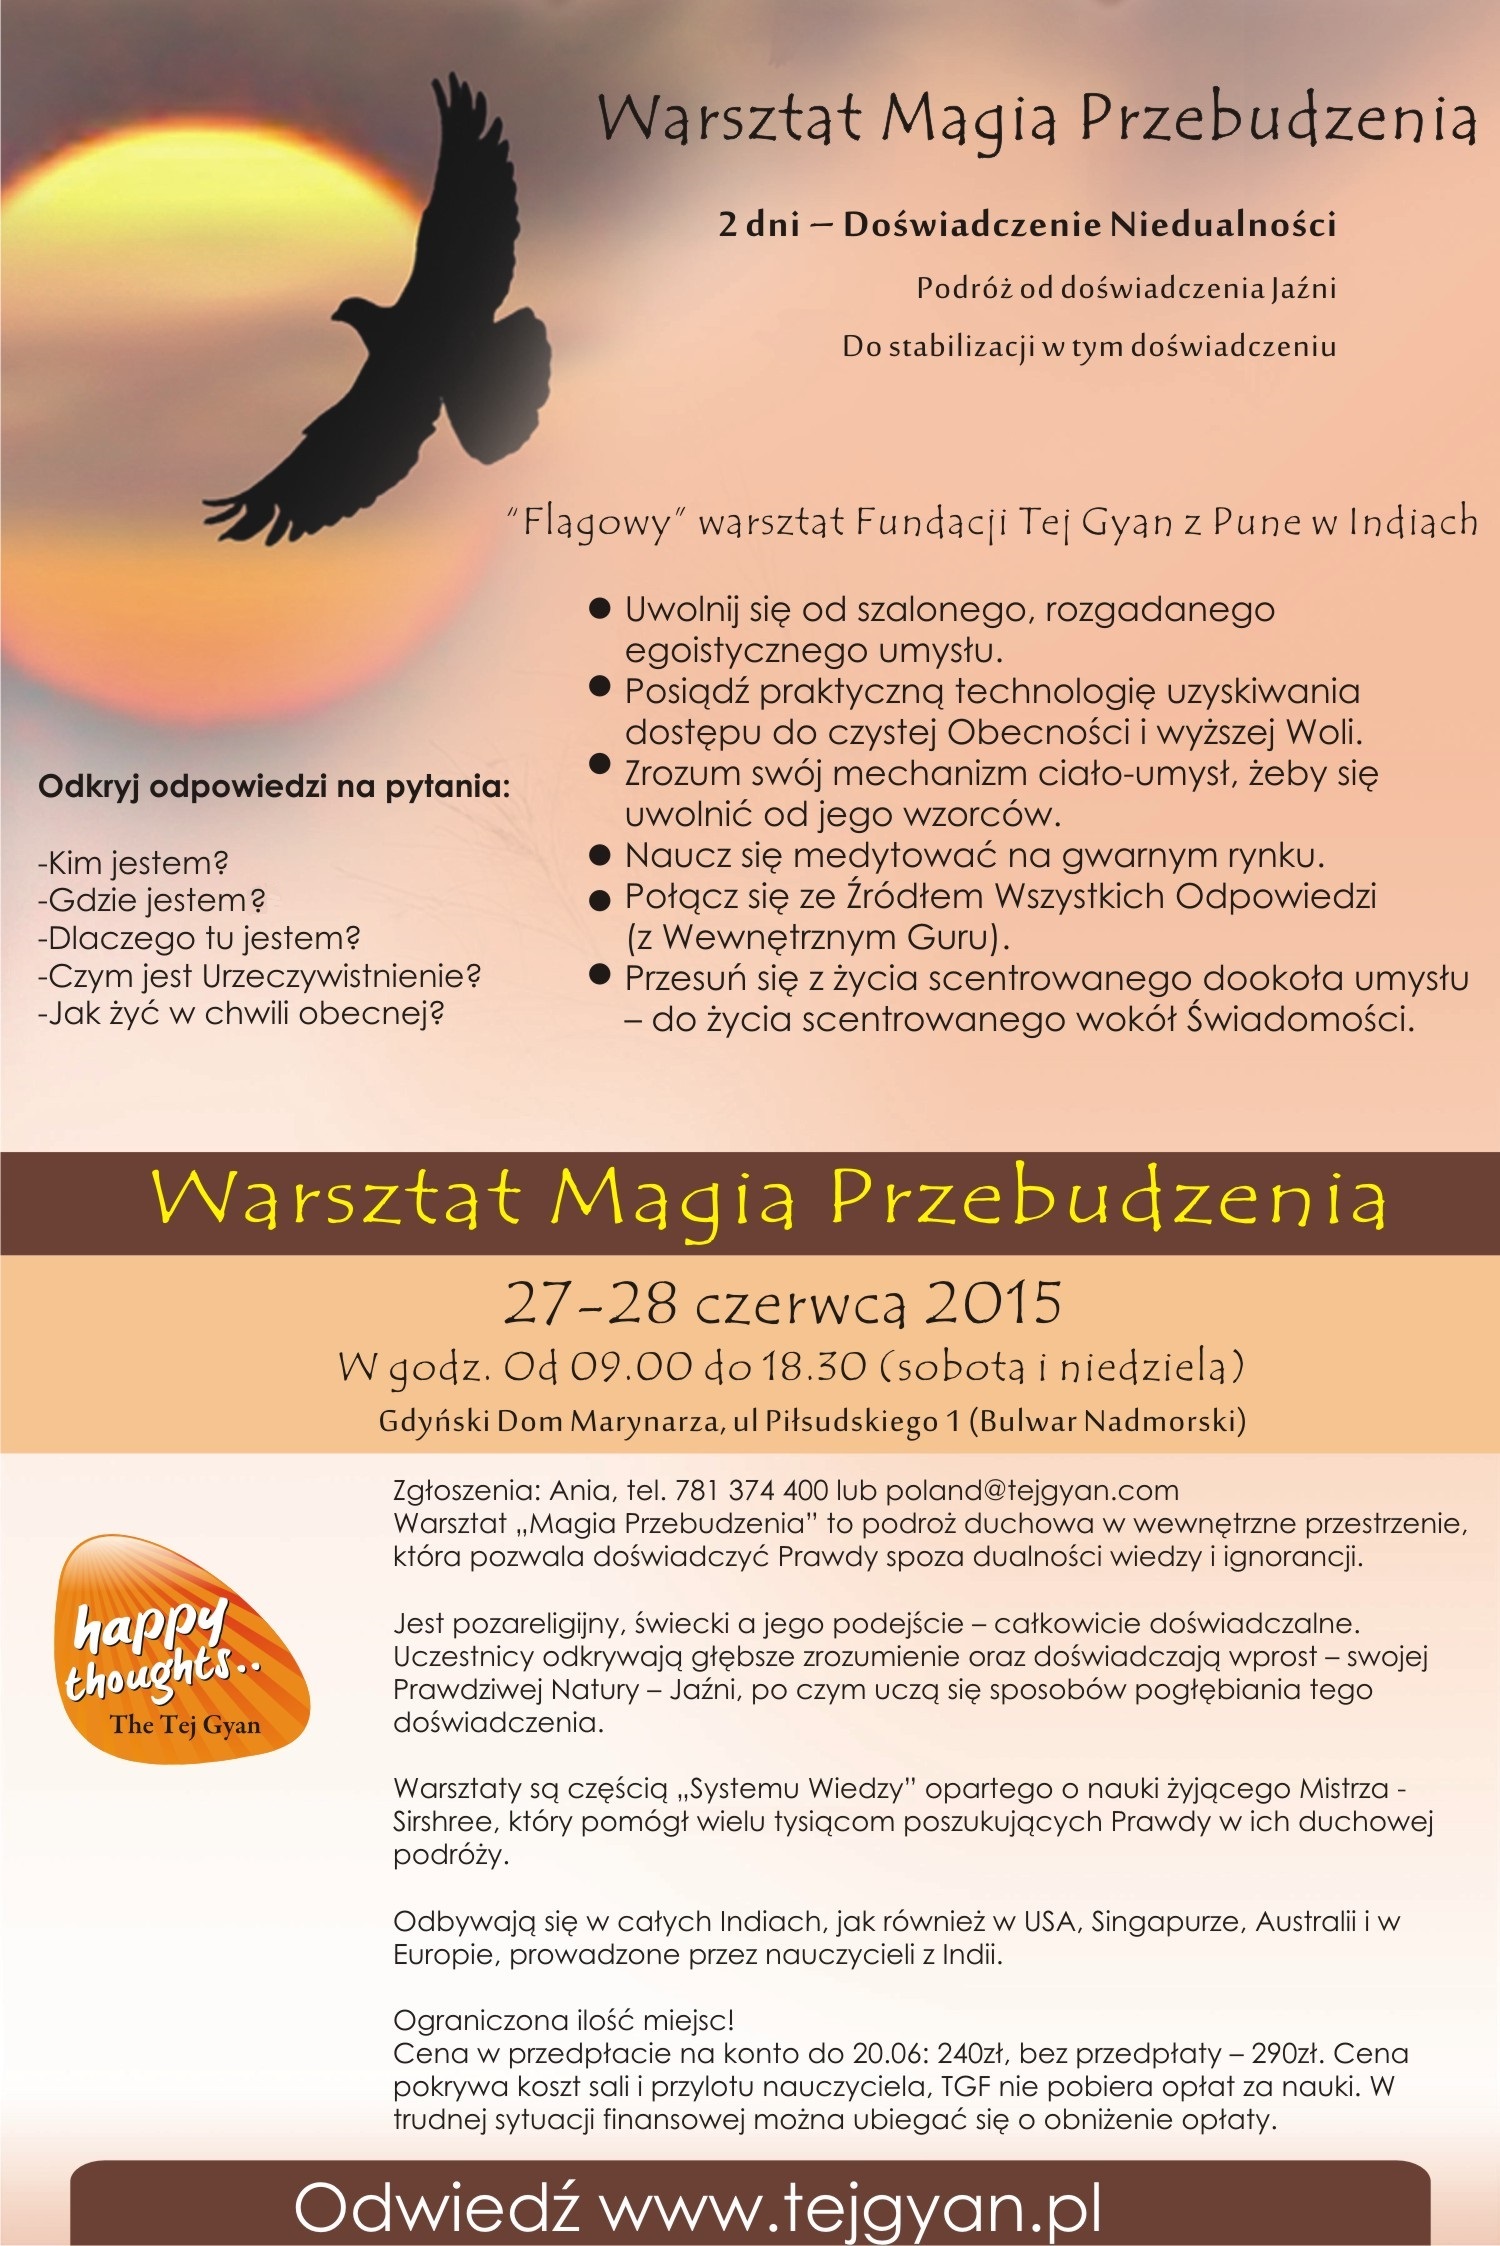 Magic of Awakening in Poland on 27-28 June 2015